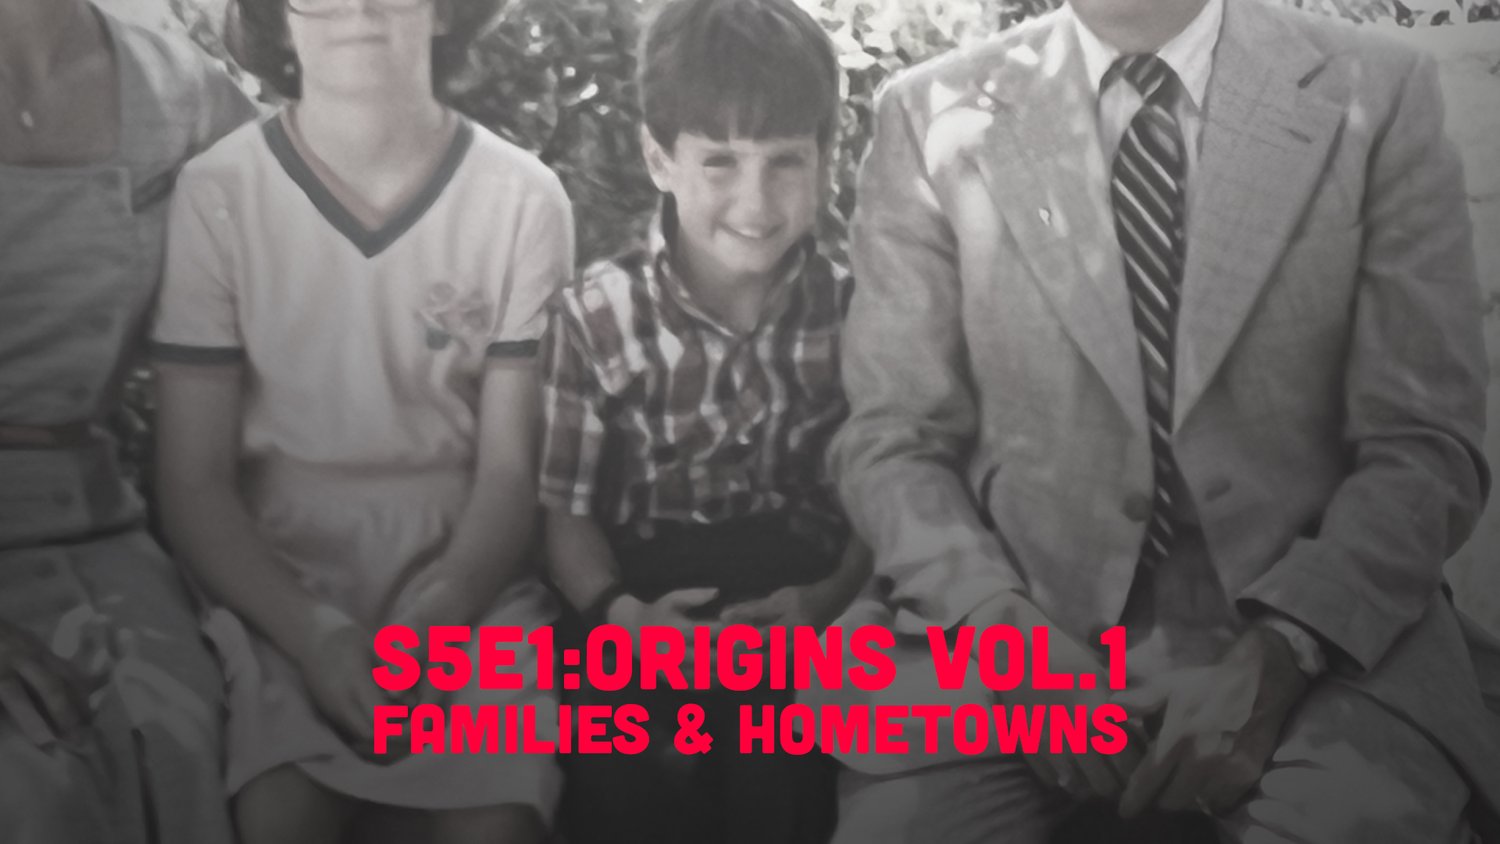 S5E1 - Origins Vol.1: Families & Hometowns